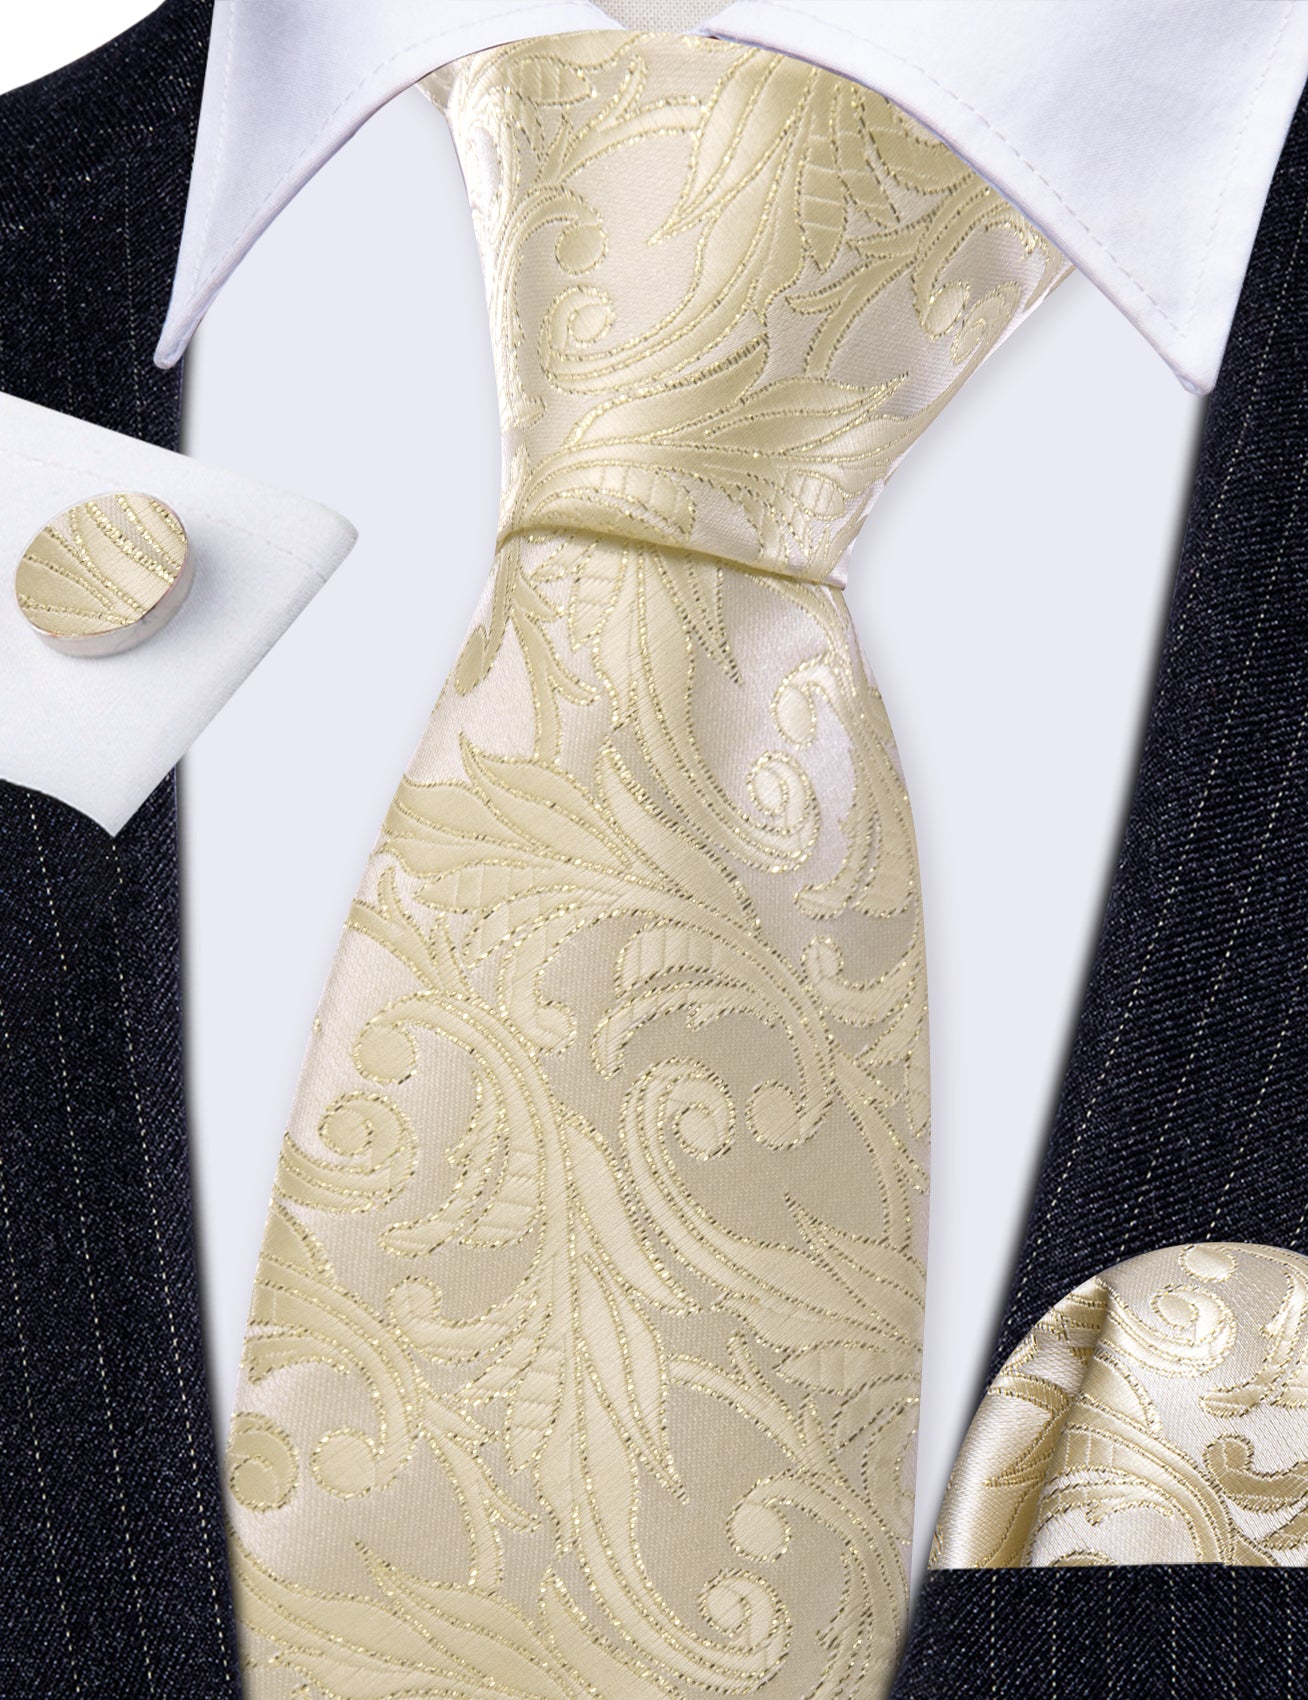 Lemon Chiffon Floral Silk Tie Handkerchief Cufflinks Set